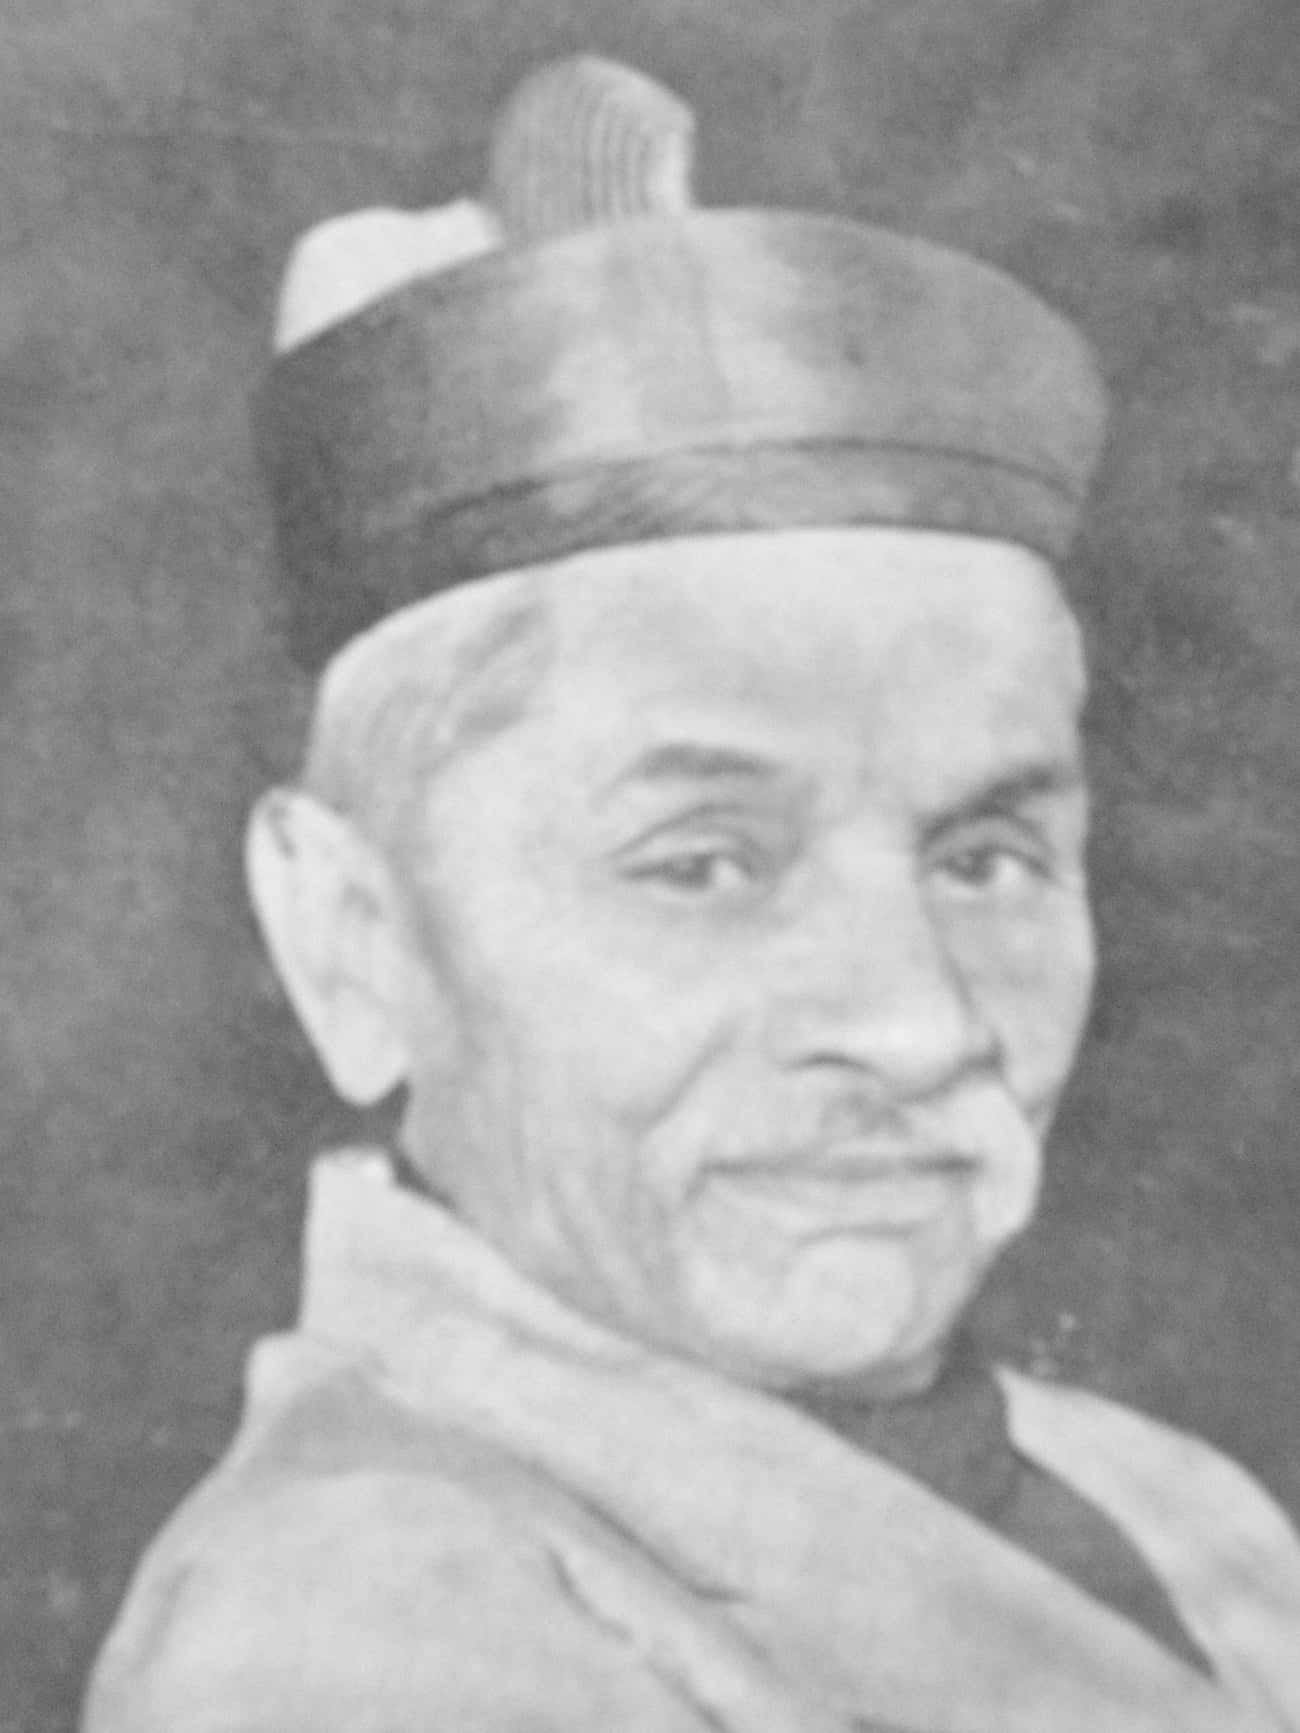 Tryambak Shankar Shejwalkar